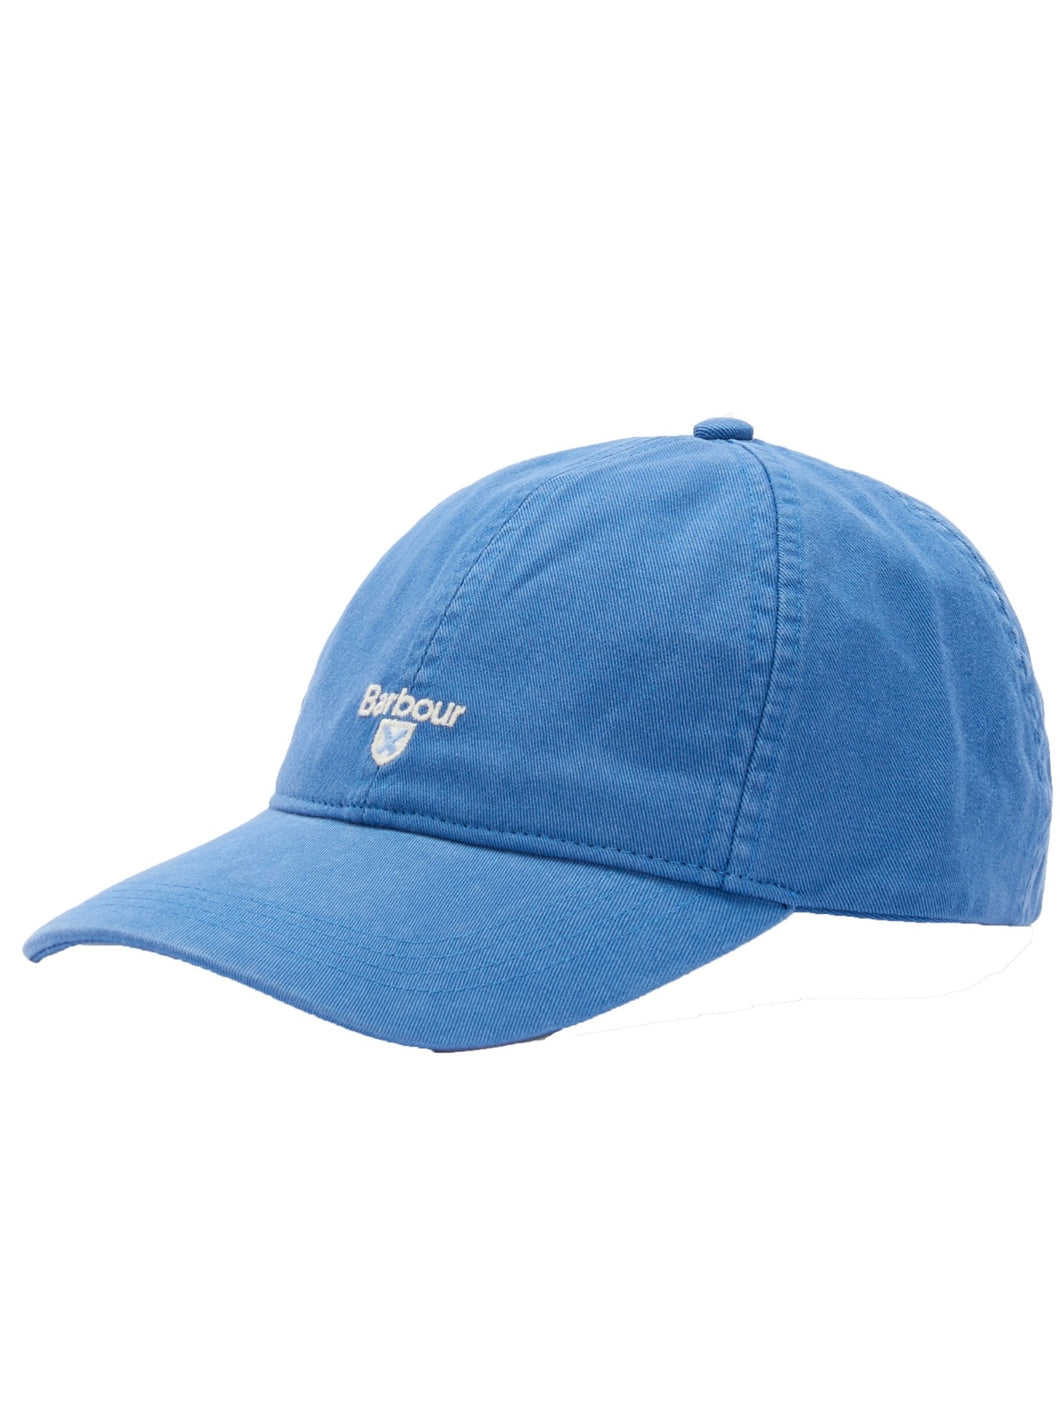 Barbour sports cap